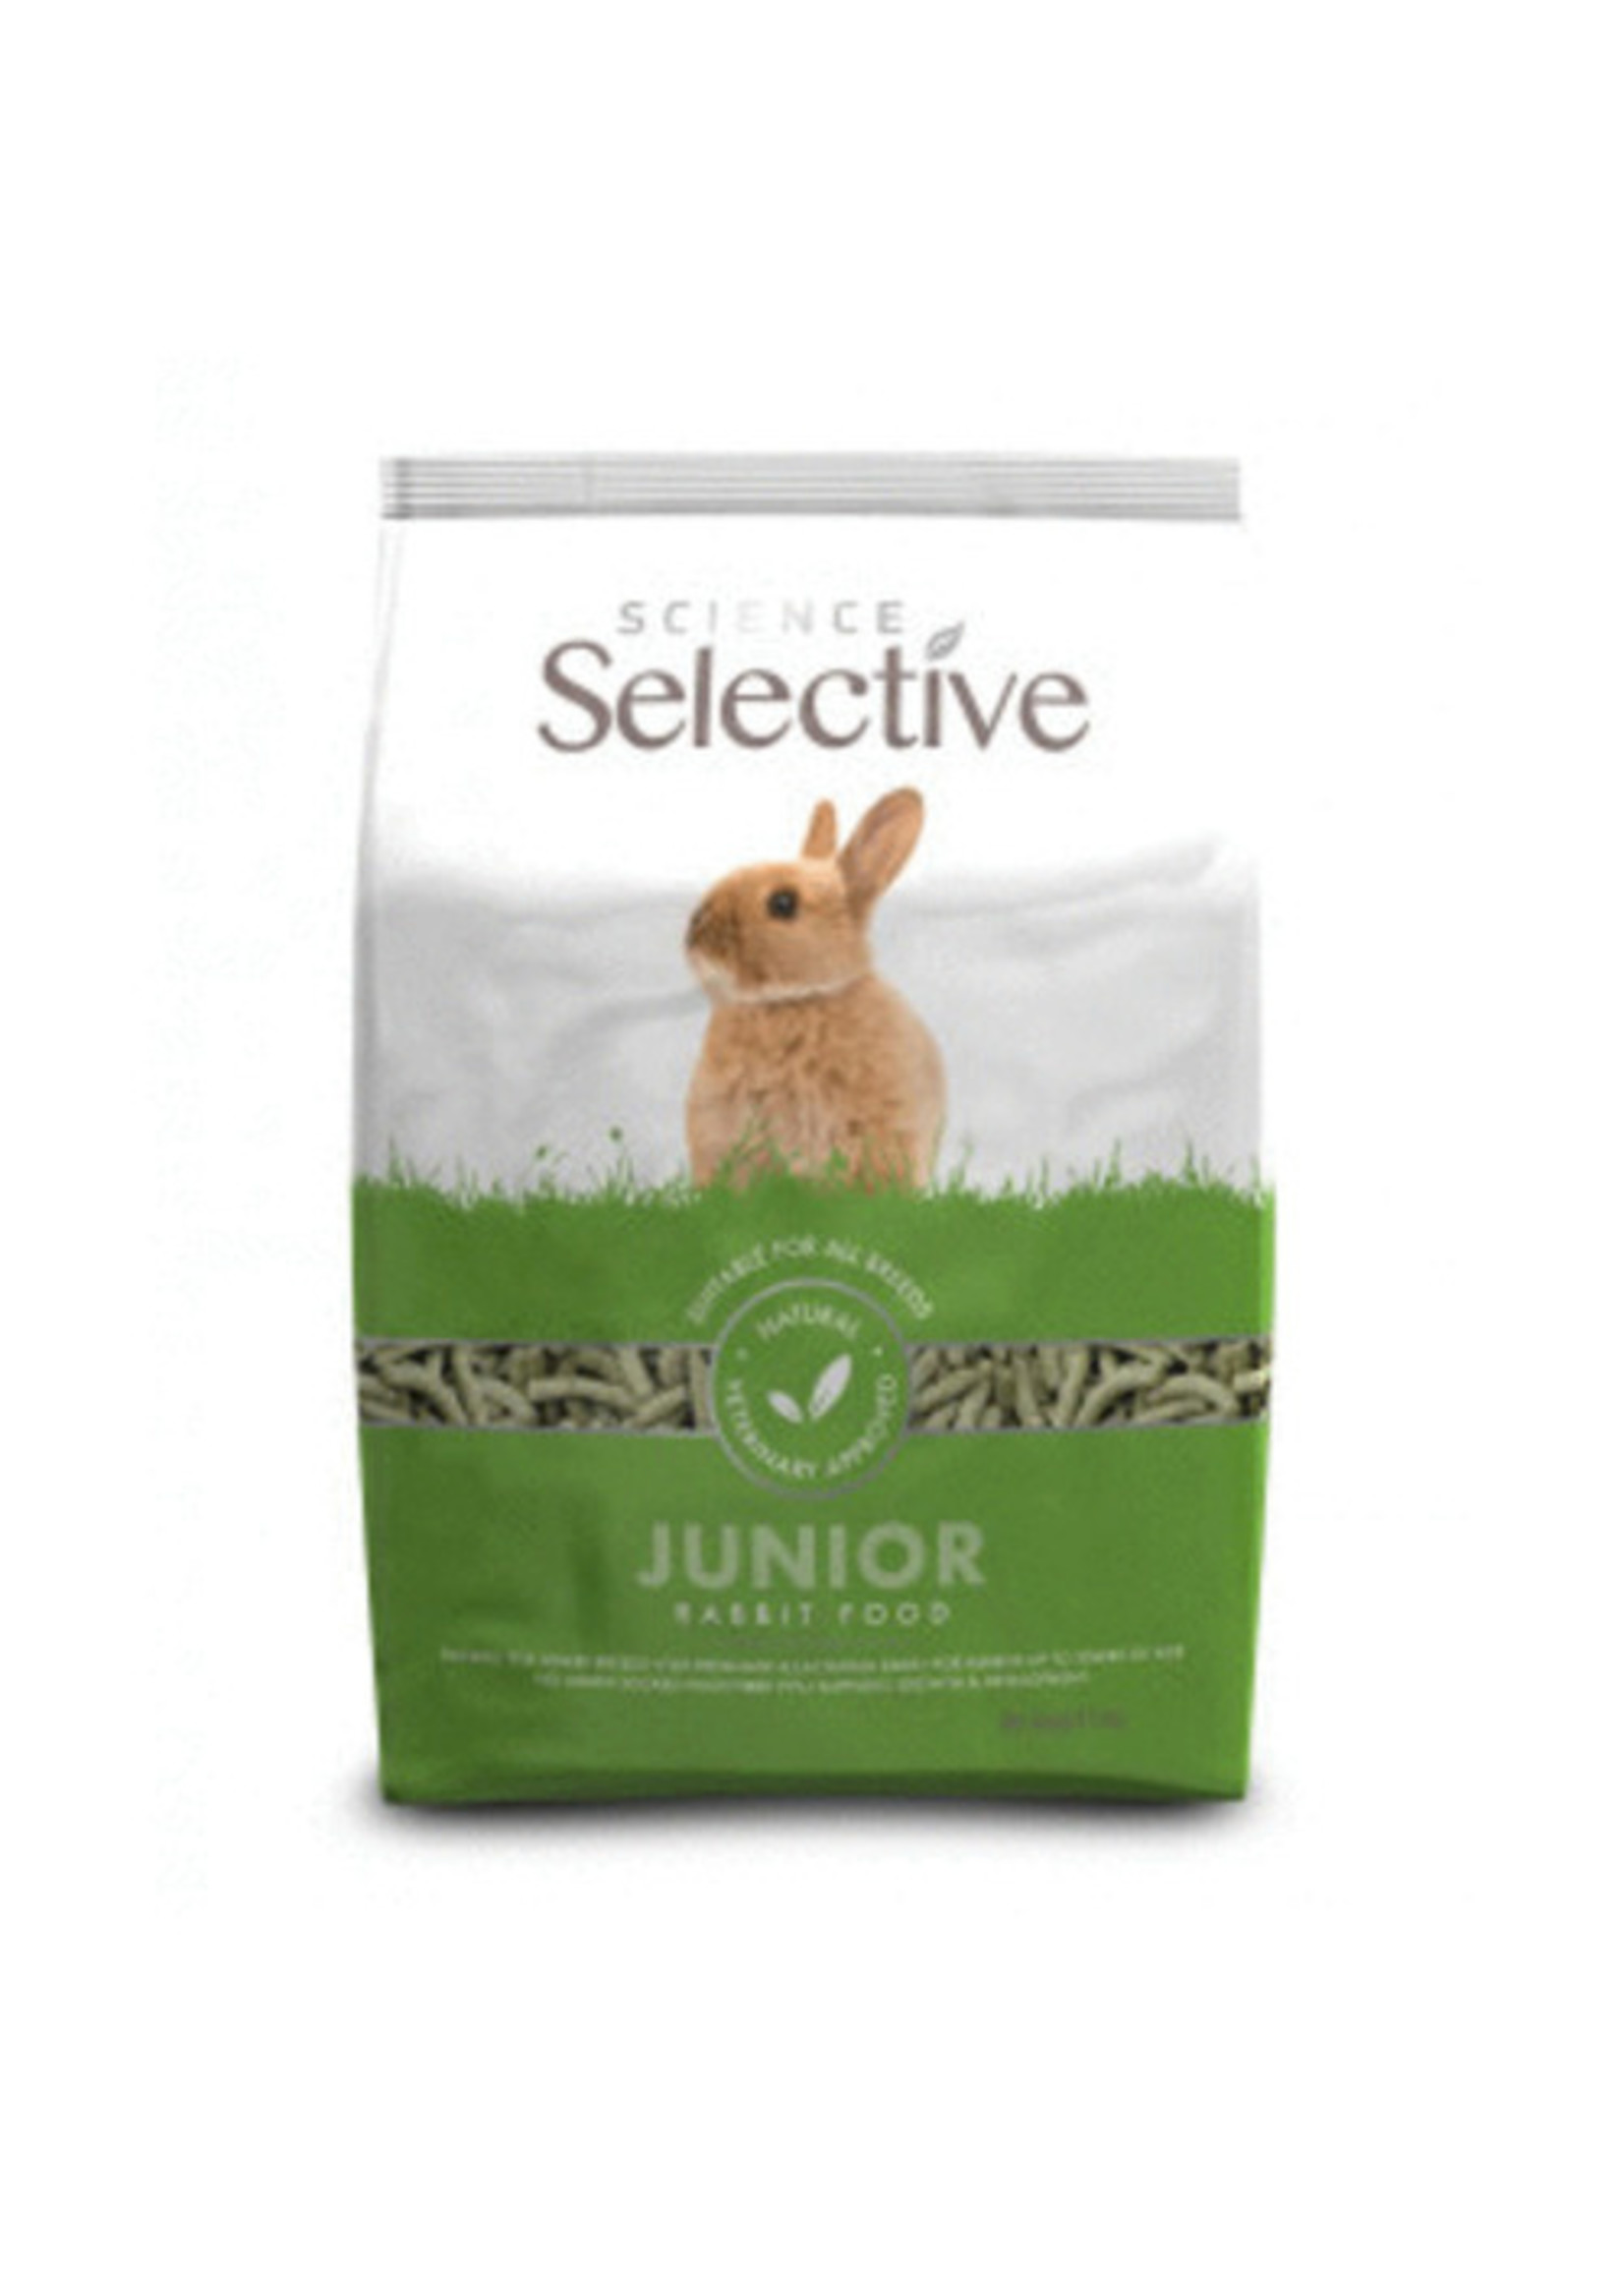 supreme selective Supreme Selective rabbit junior